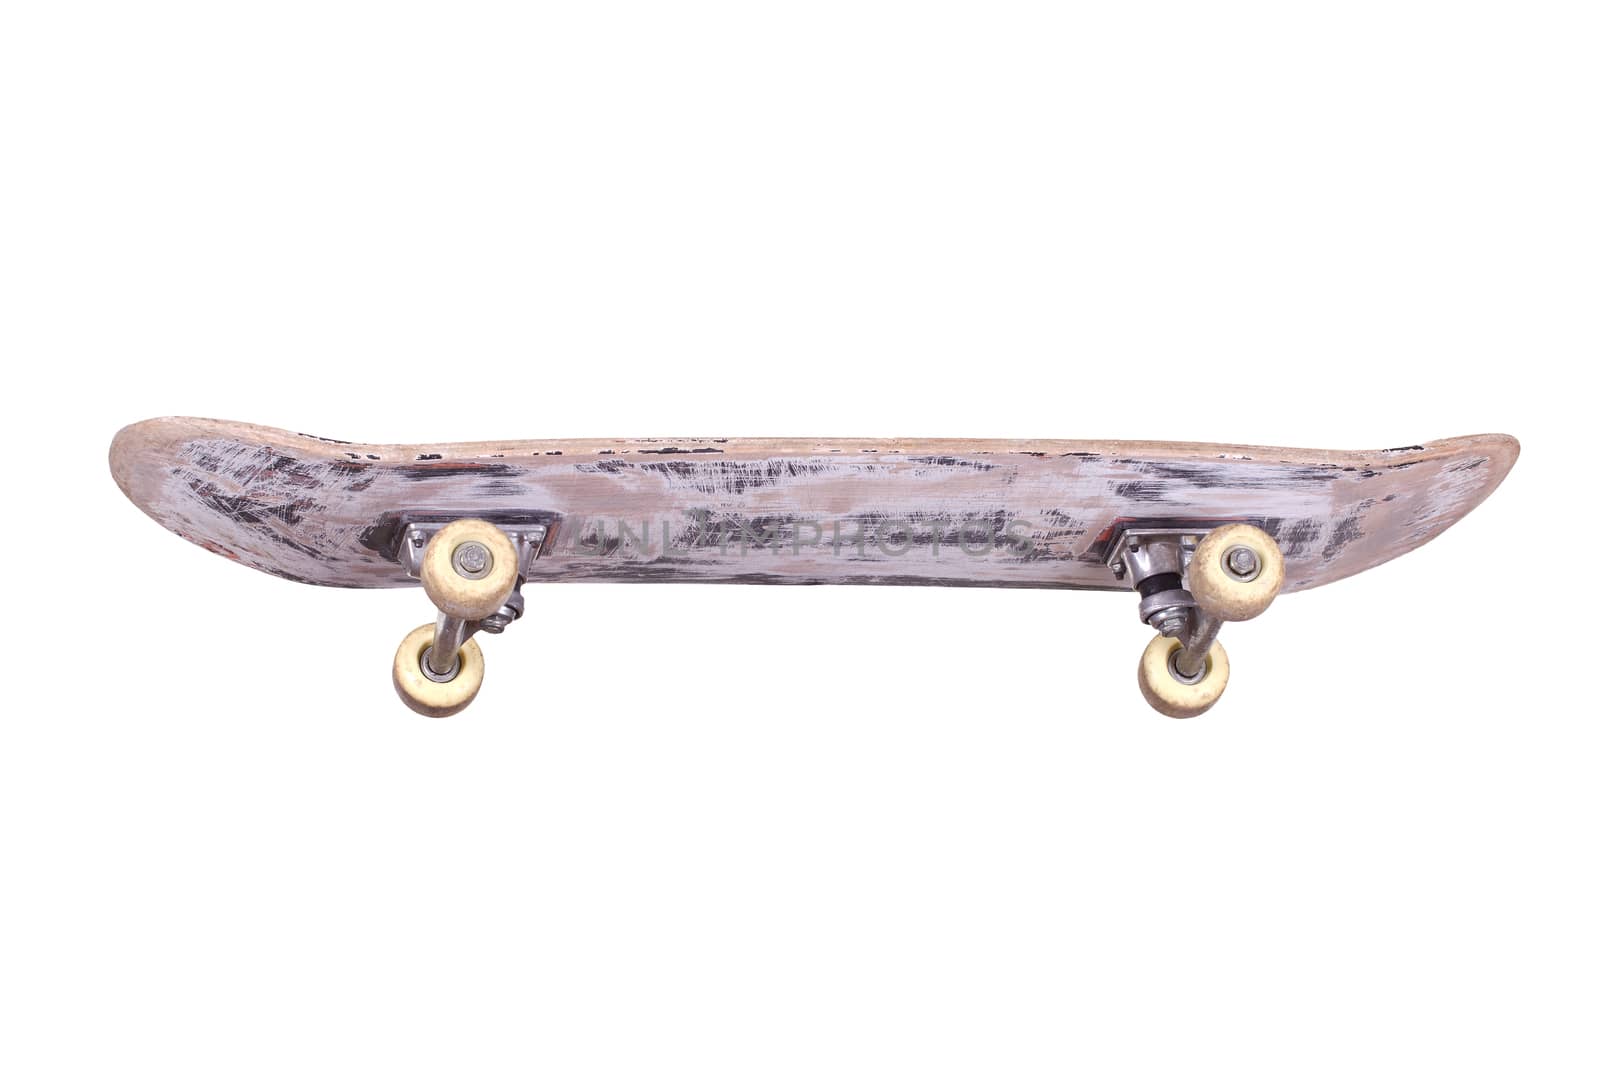 old used wooden skateboard